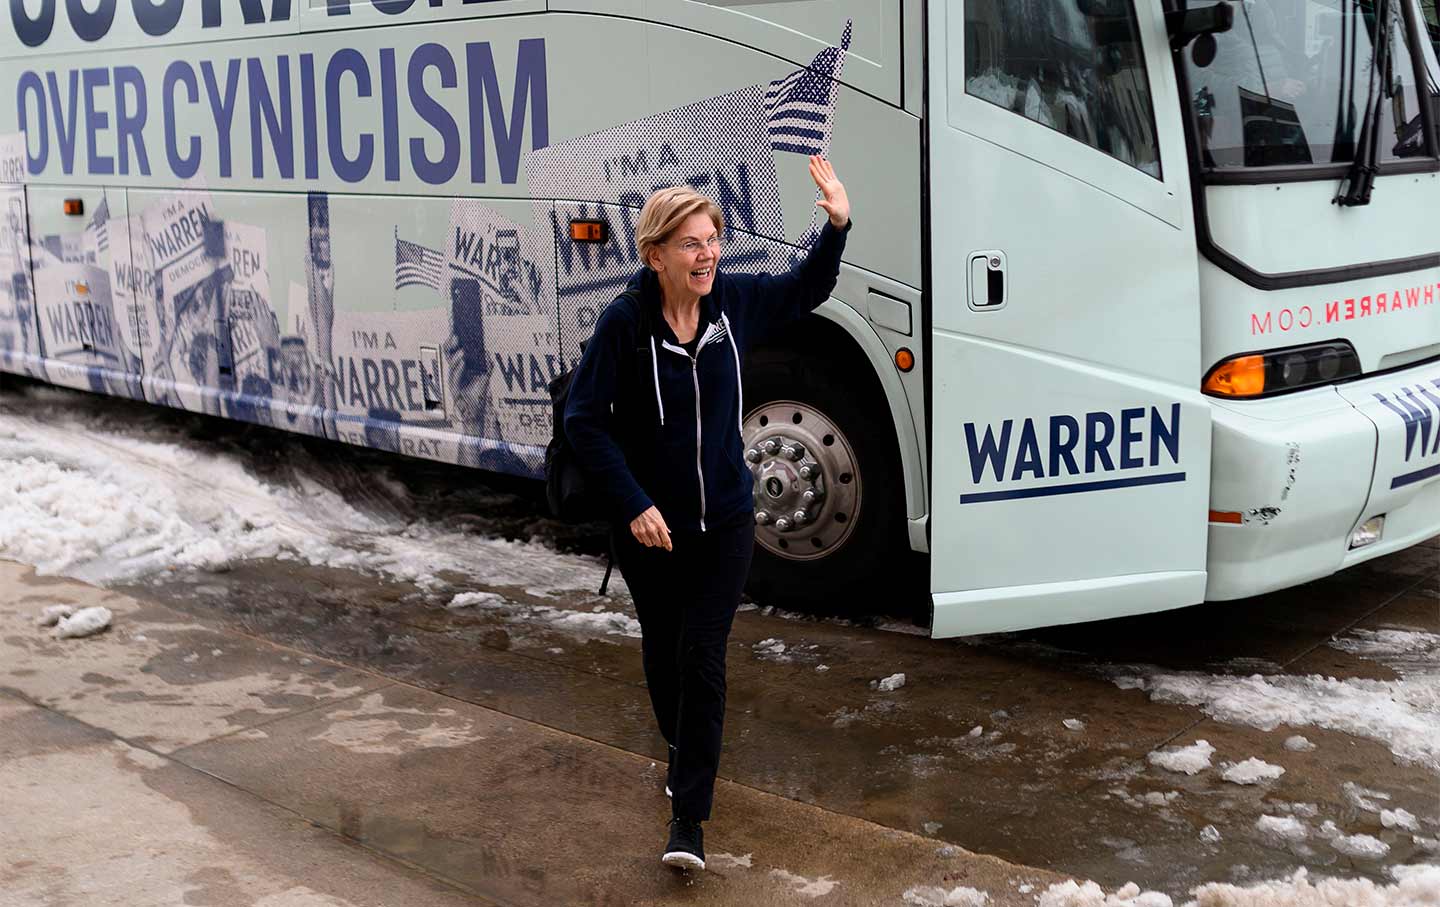 Elizabeth Warren Got More Than an Endorsement From ‘The Des Moines Register’